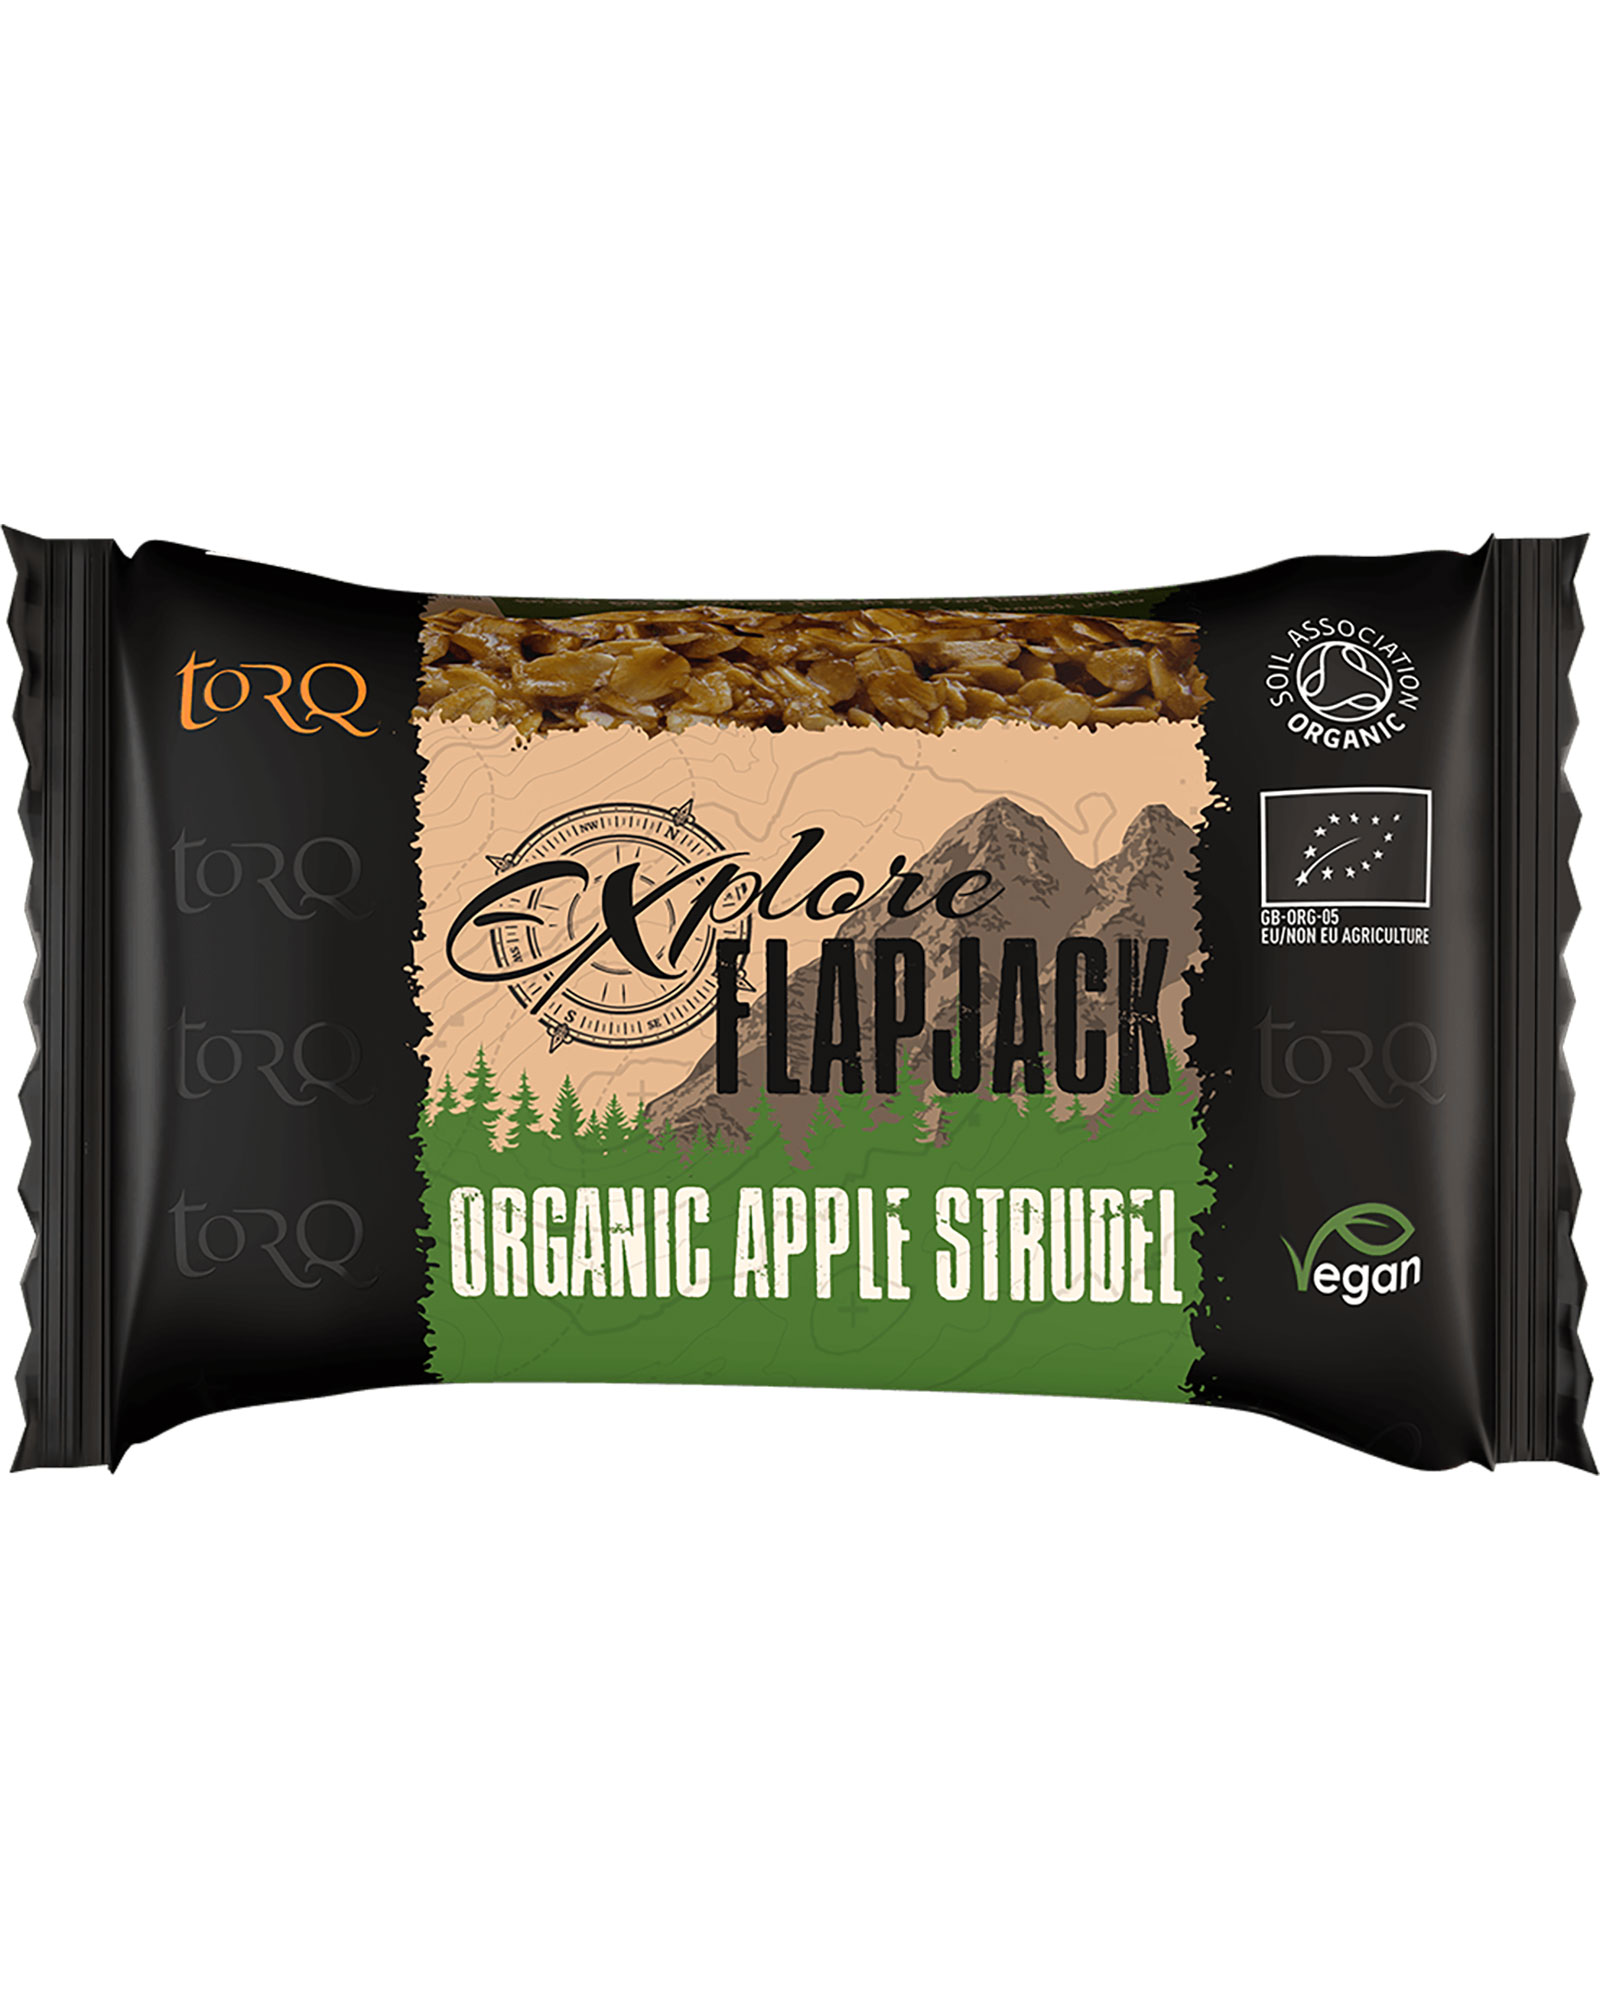 Torq Explore Flapjack Bar   Organic Apple Strudel